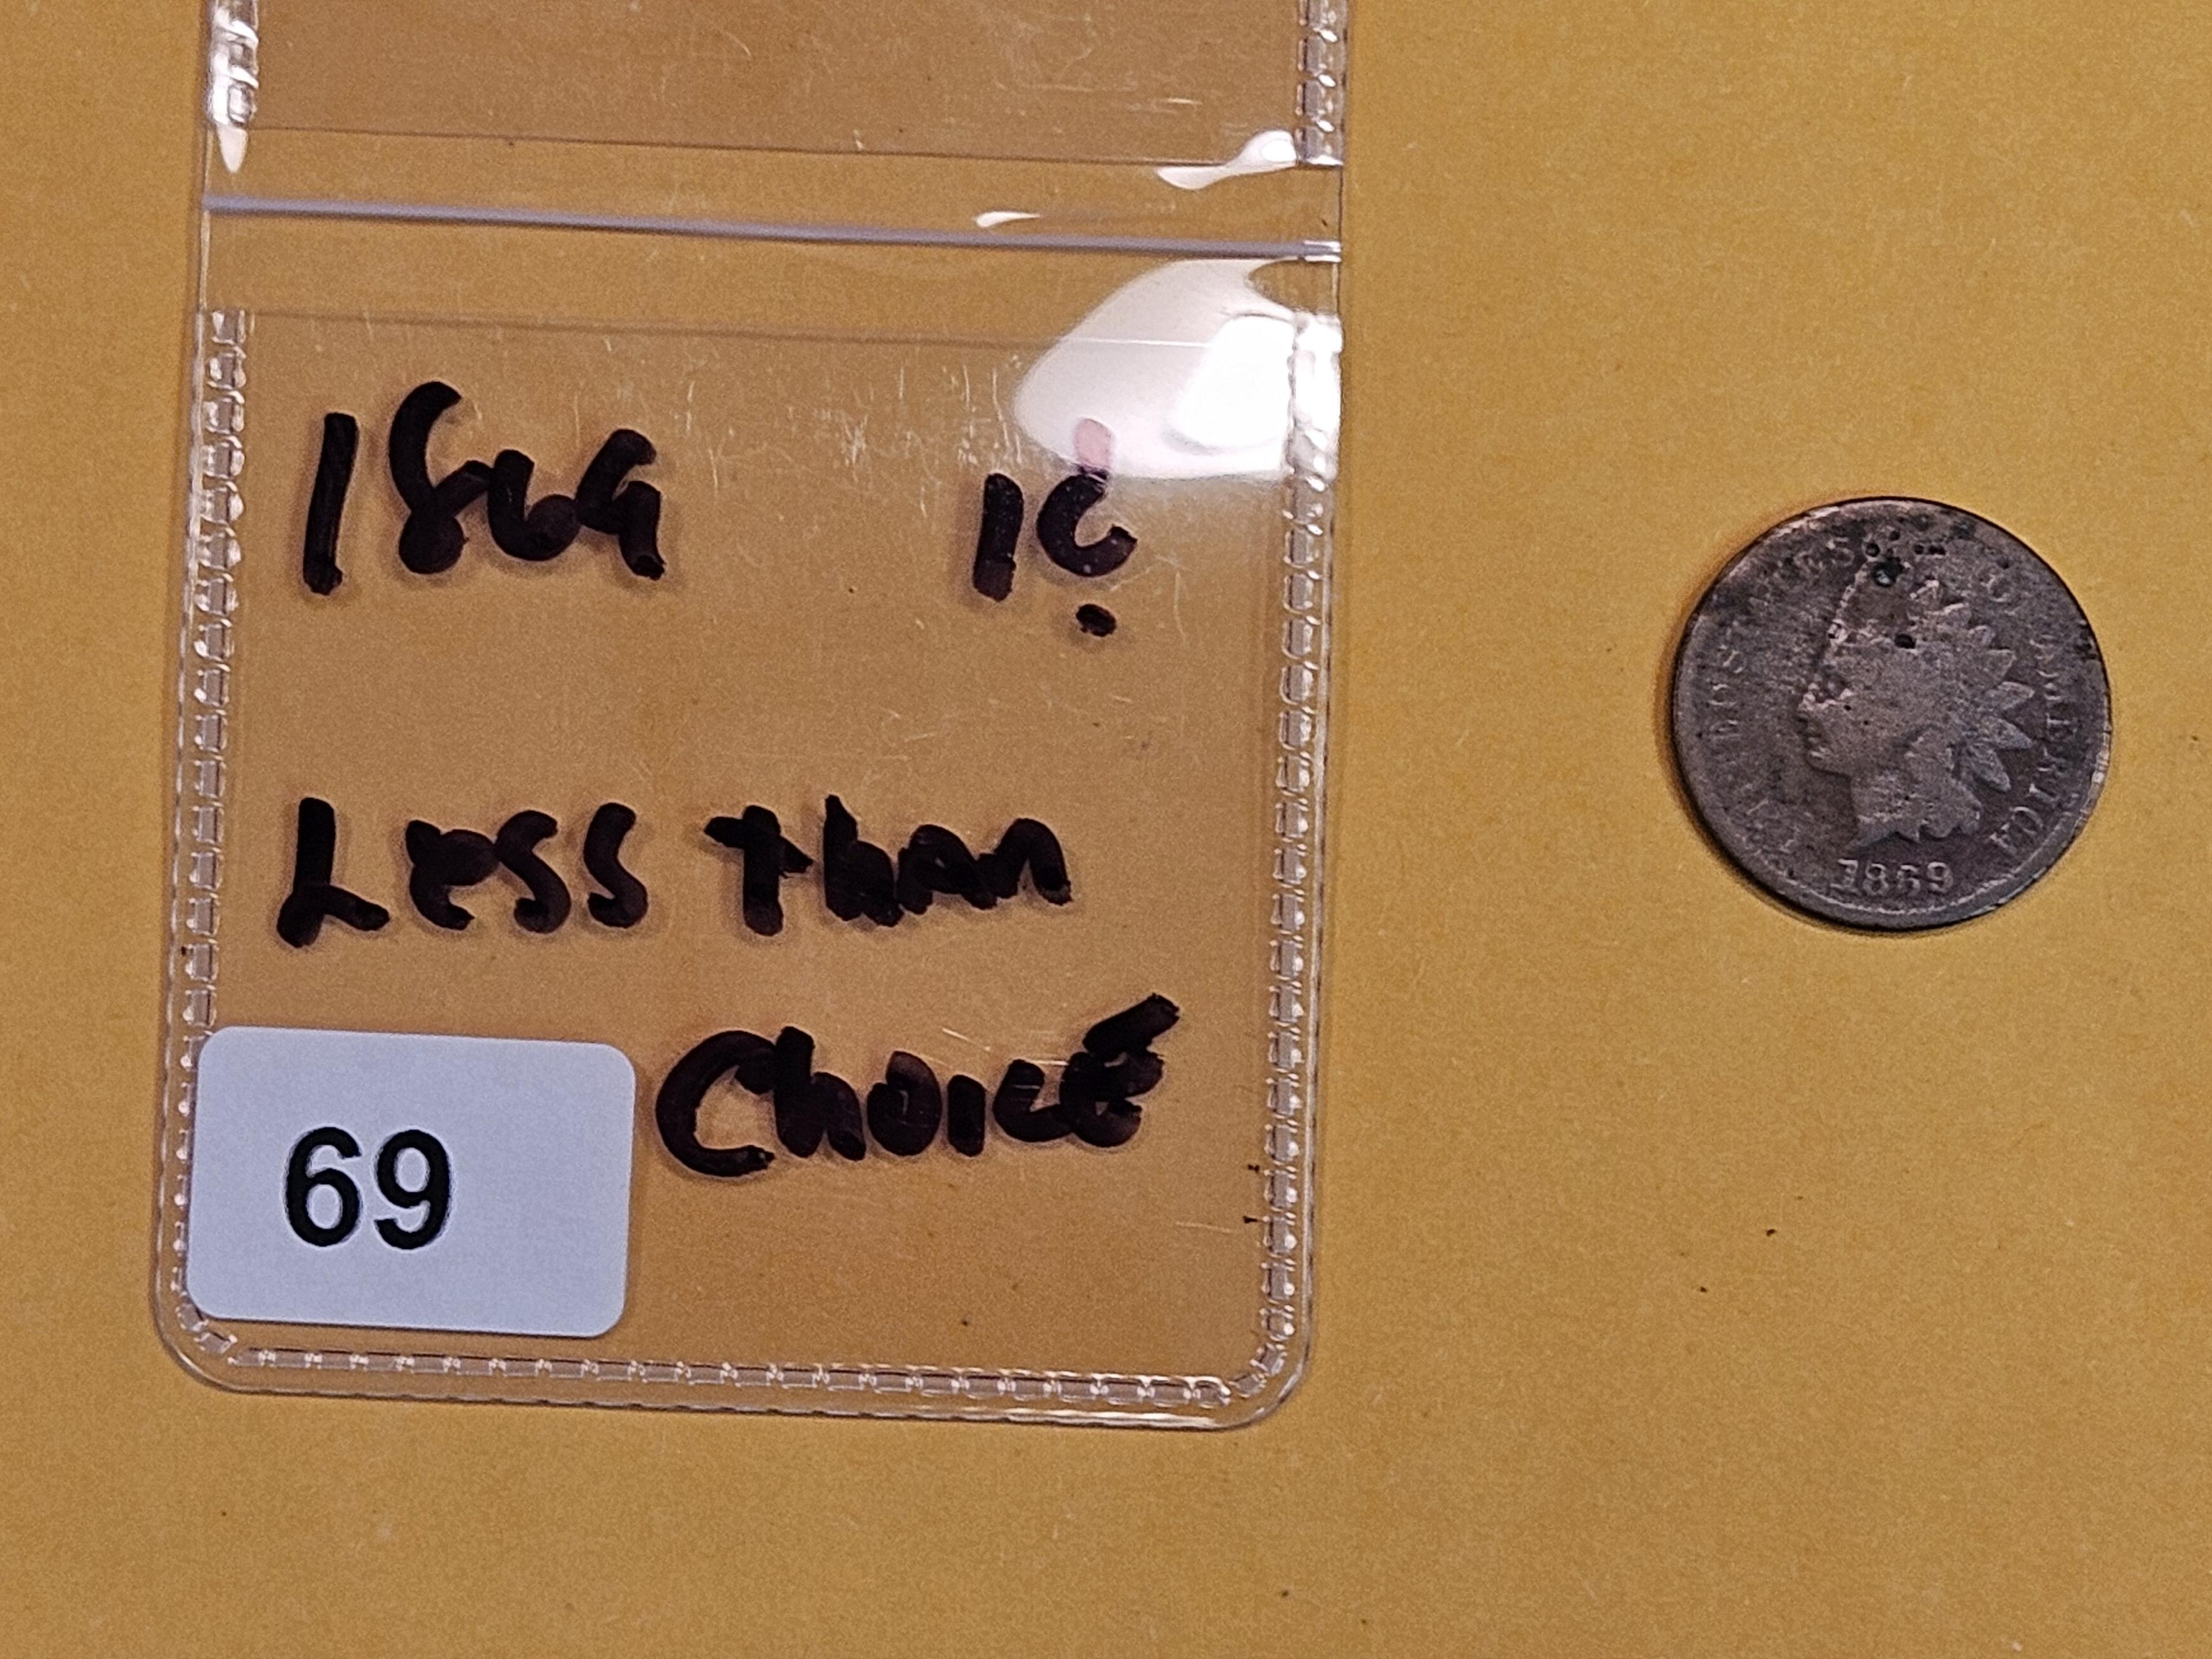 Semi-key 1869 Indian Cent